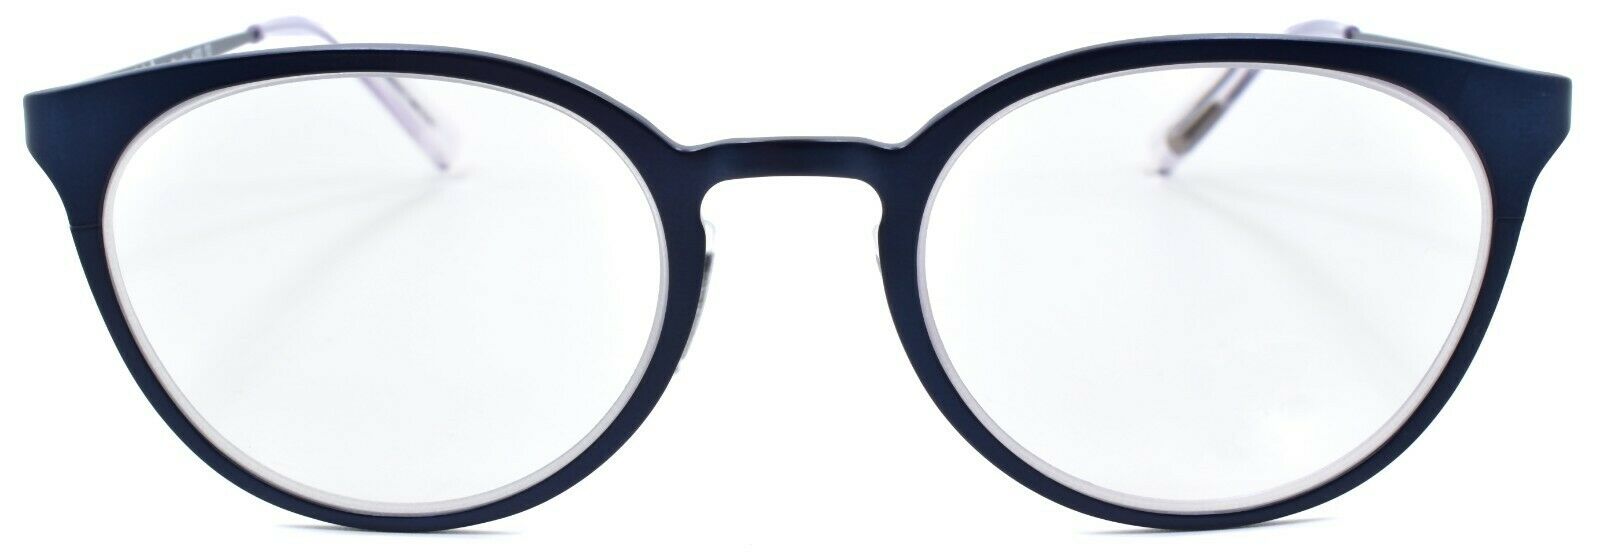 2-Eyebobs Jim Dandy 600 10 Reading Glasses Navy Blue +1.00-842754137799-IKSpecs